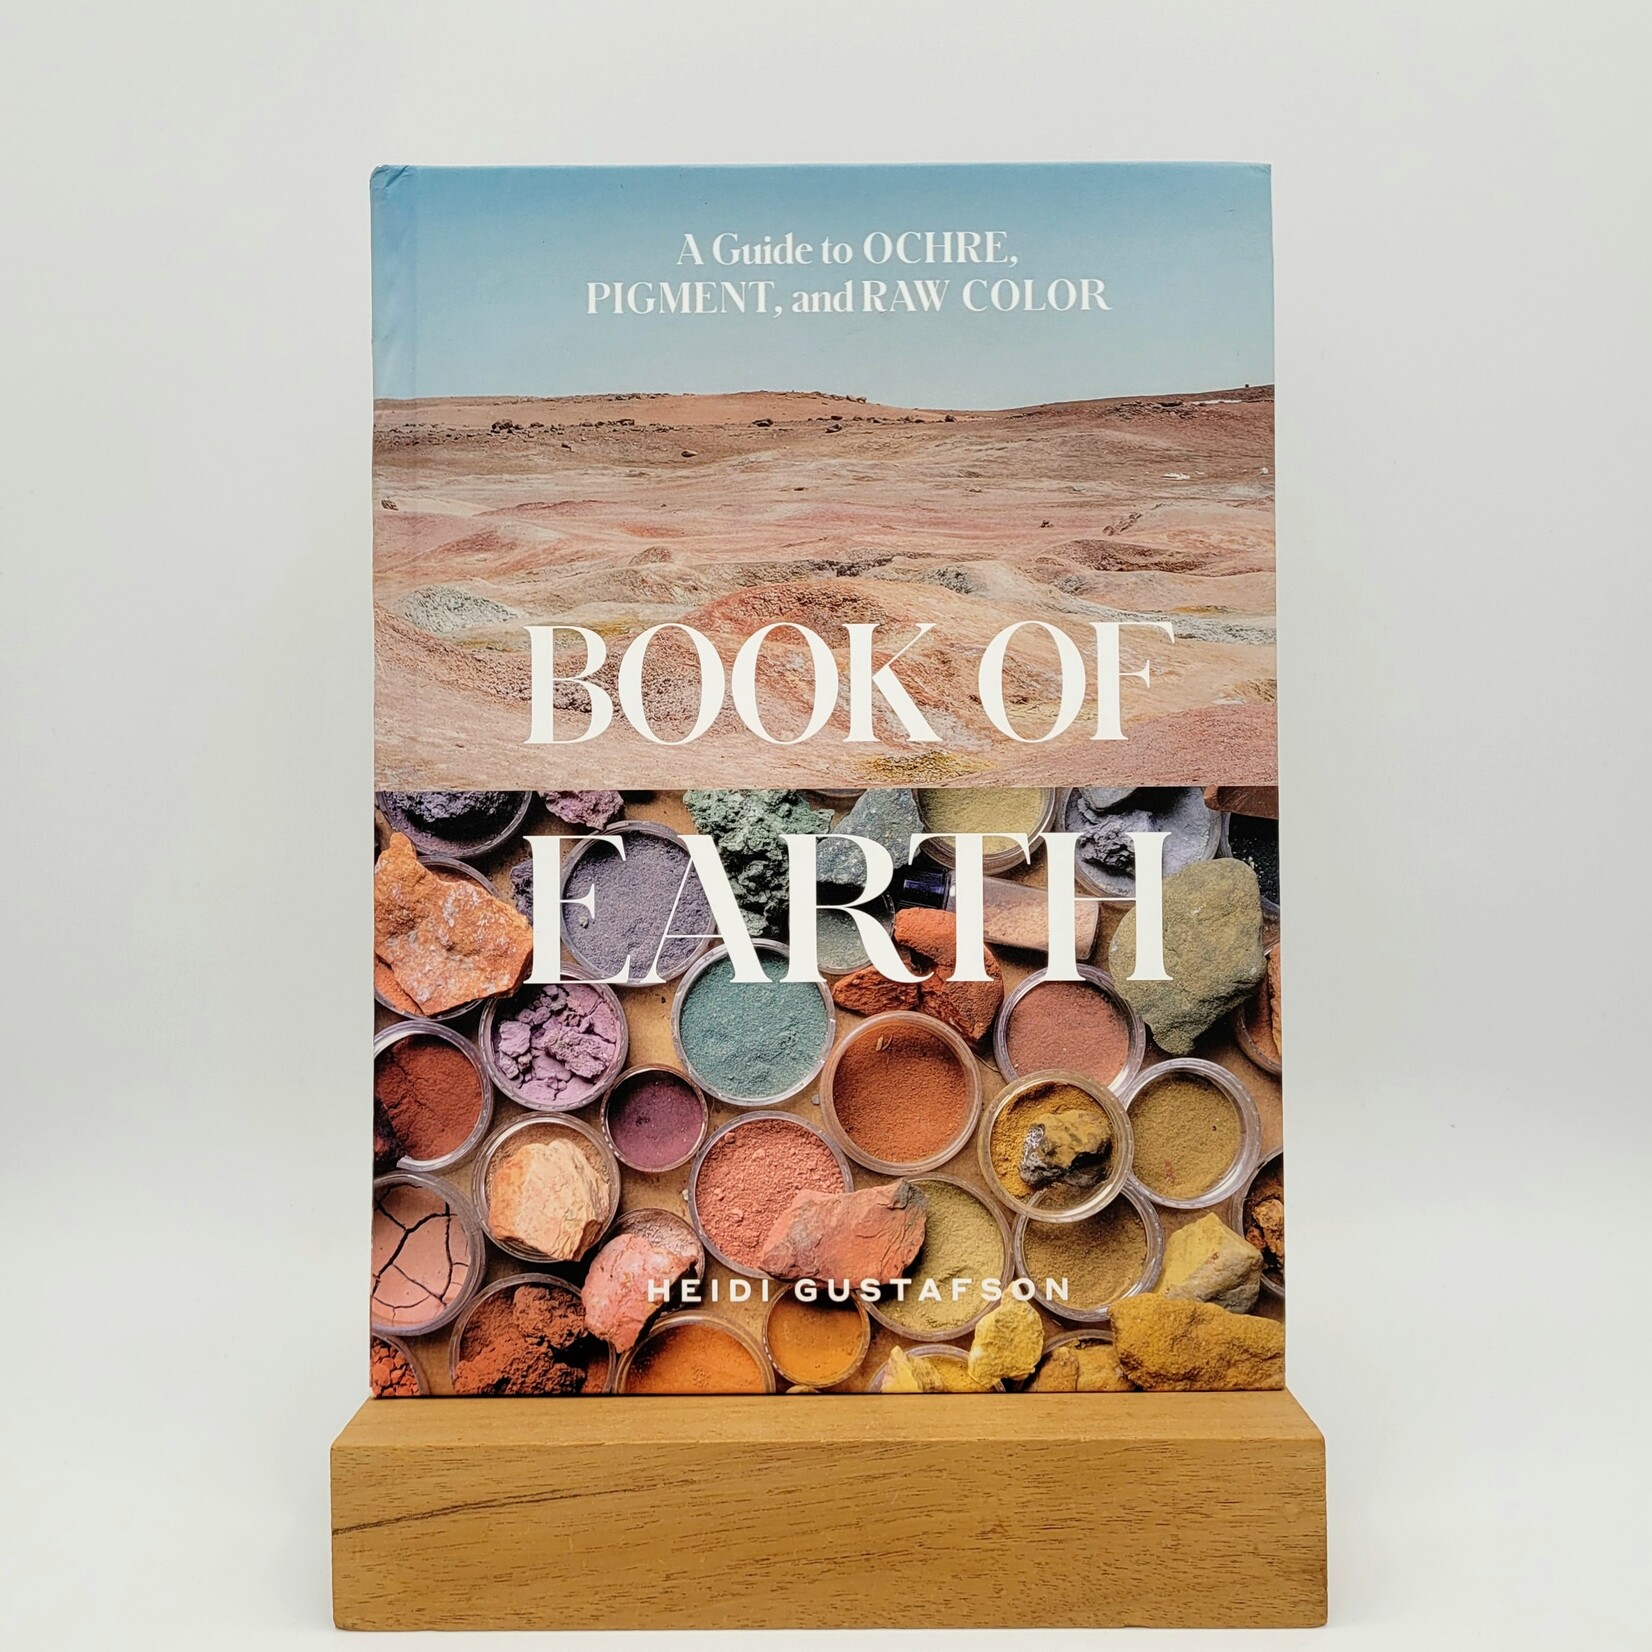 Abrams Book of Earth by Heidi Gustafson